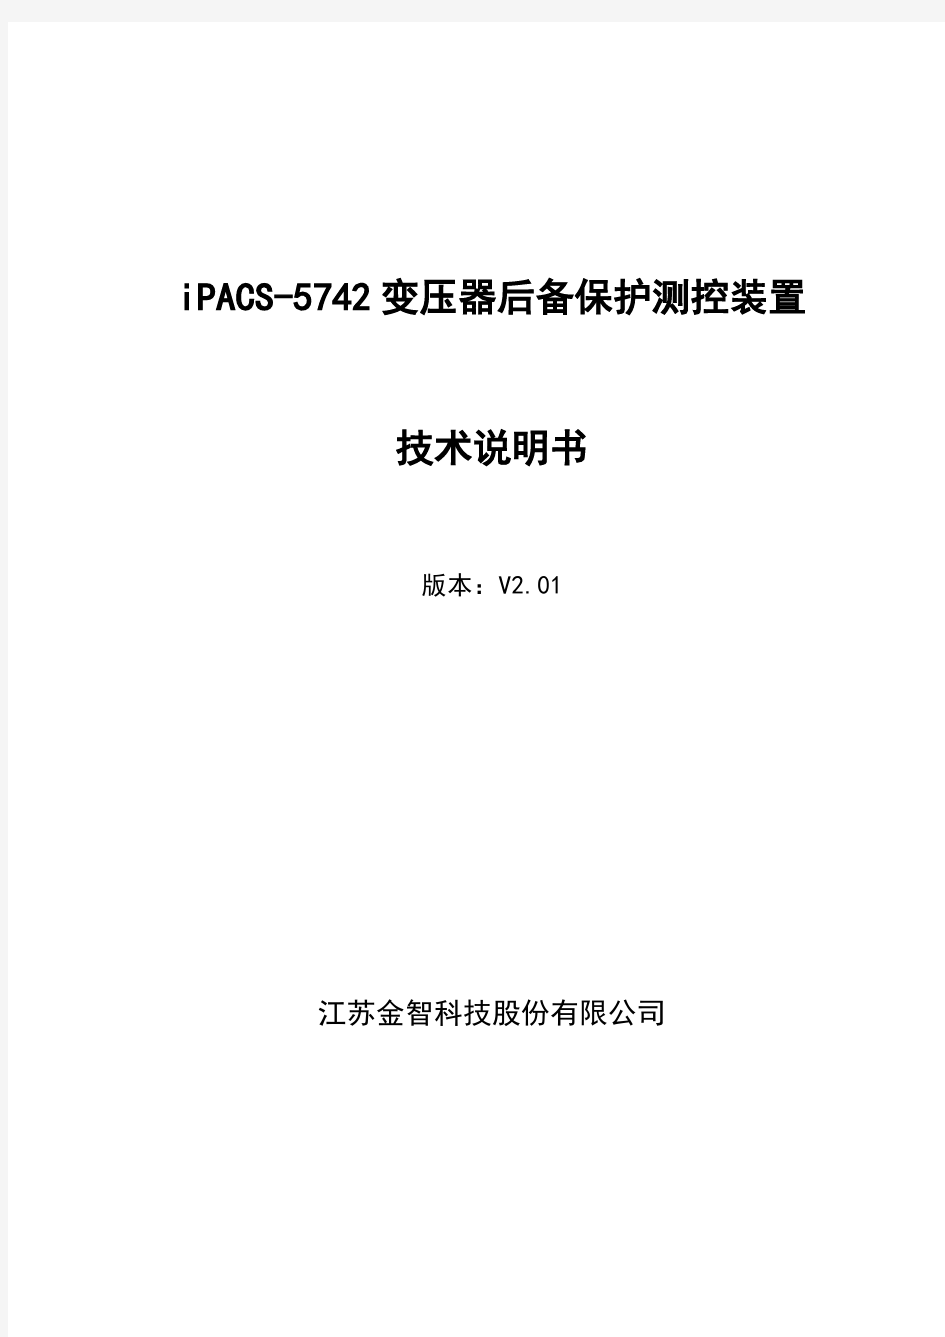 iPACS-5742变压器后备保护测控装置技术说明书V2.01